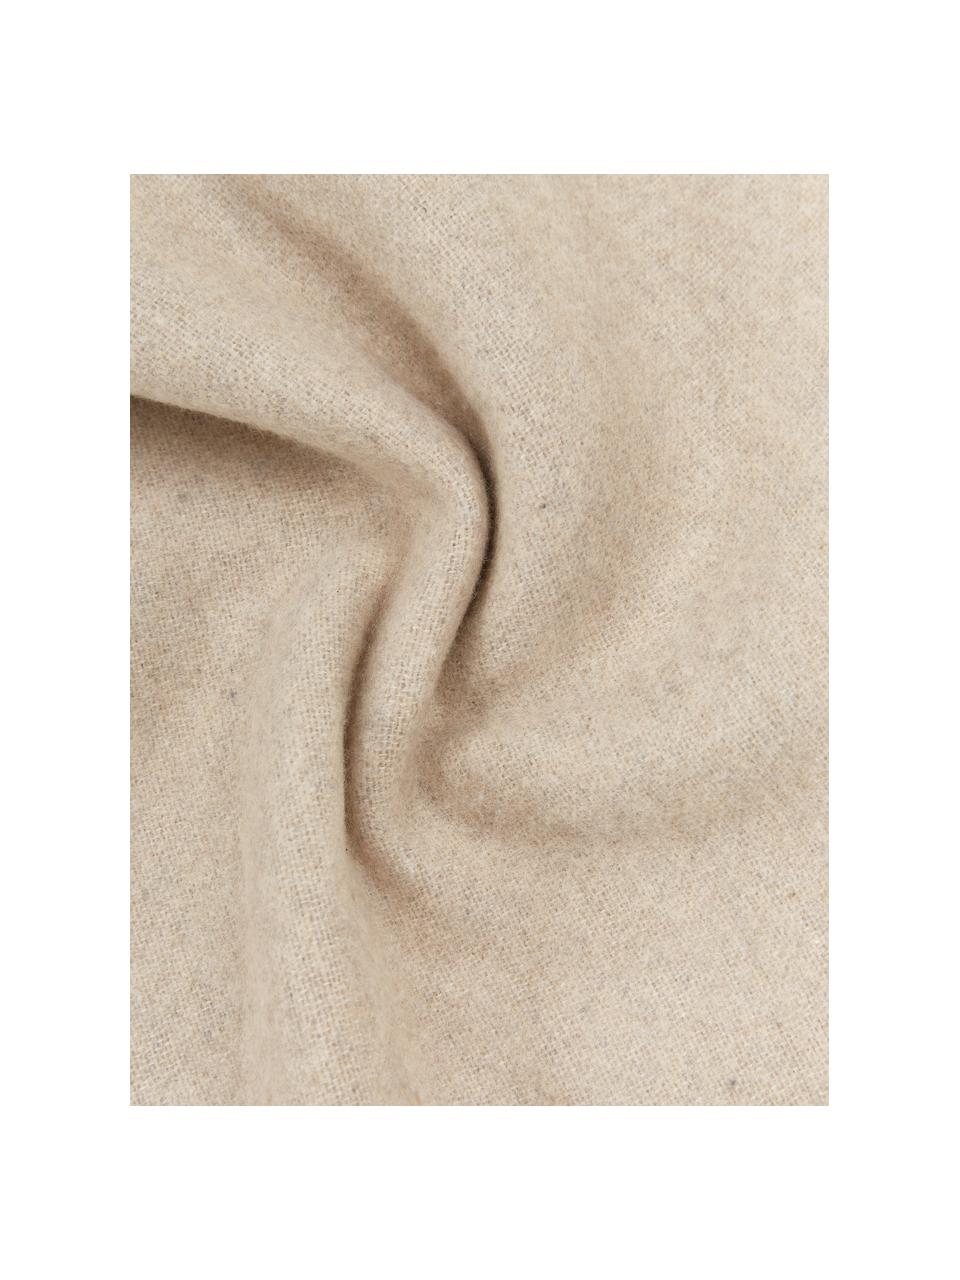 Zachte fleece kussenhoes Sylt met stiksels, 85% katoen, 15% polyacryl, Beige, 40 x 40 cm